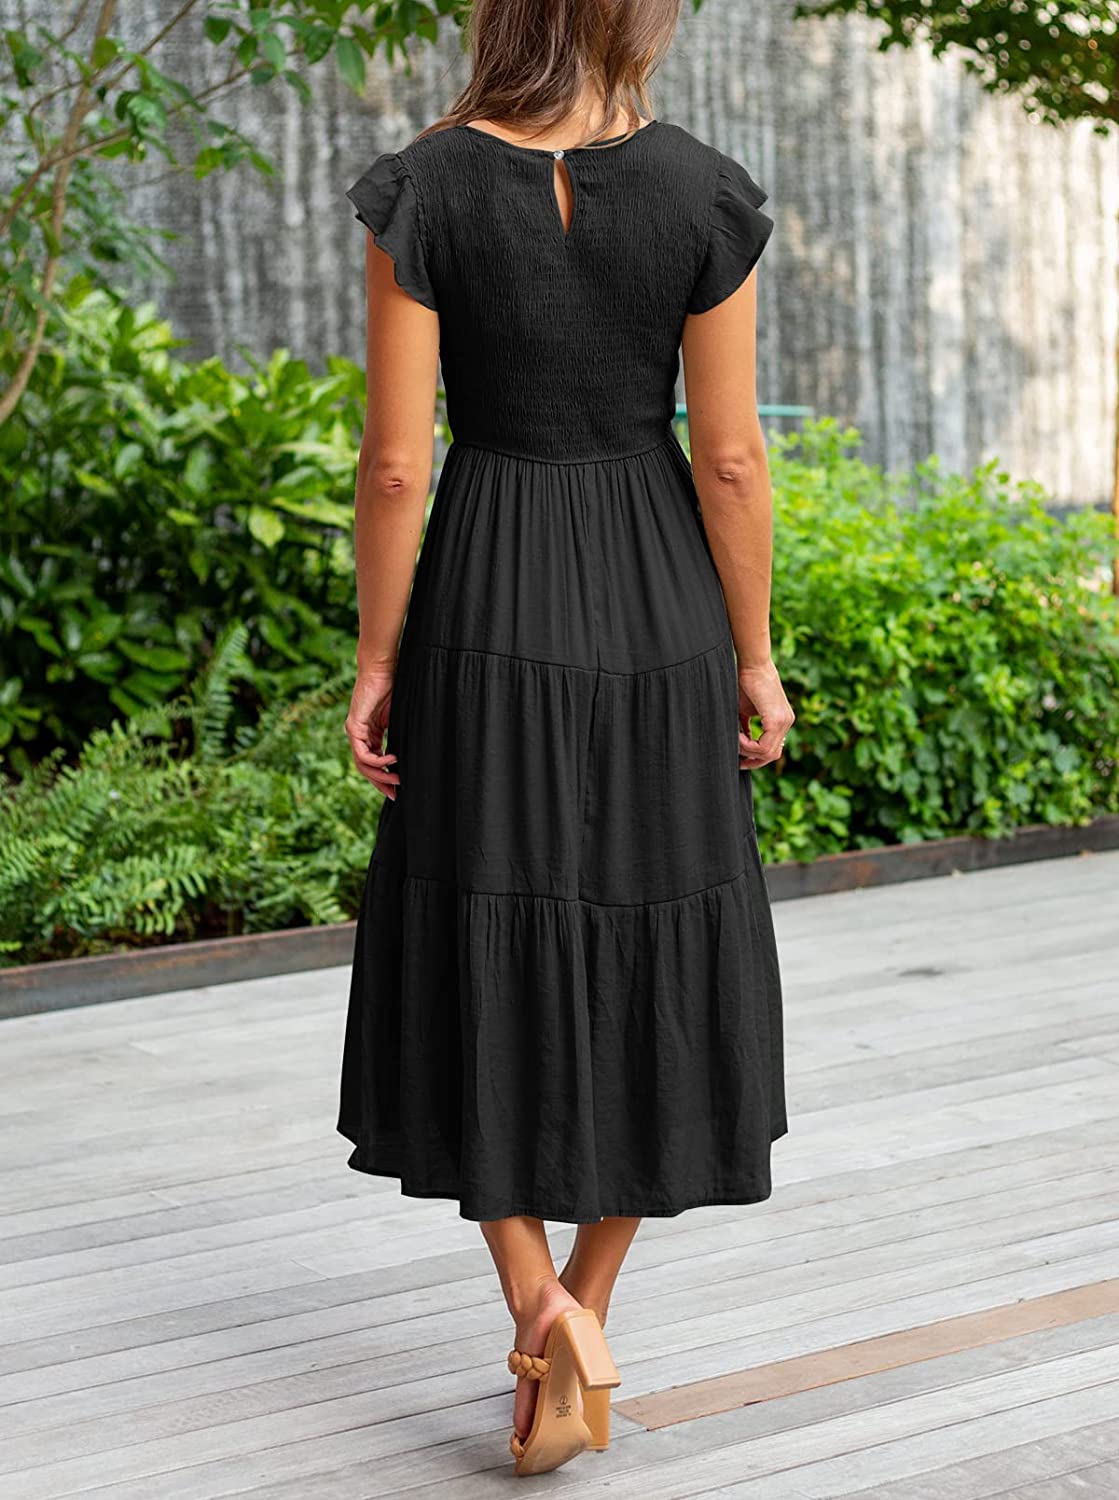 Women's Summer Casual Midi Maxi Dress Boho Flutter Sleeve Smocked A-Line Long Dress